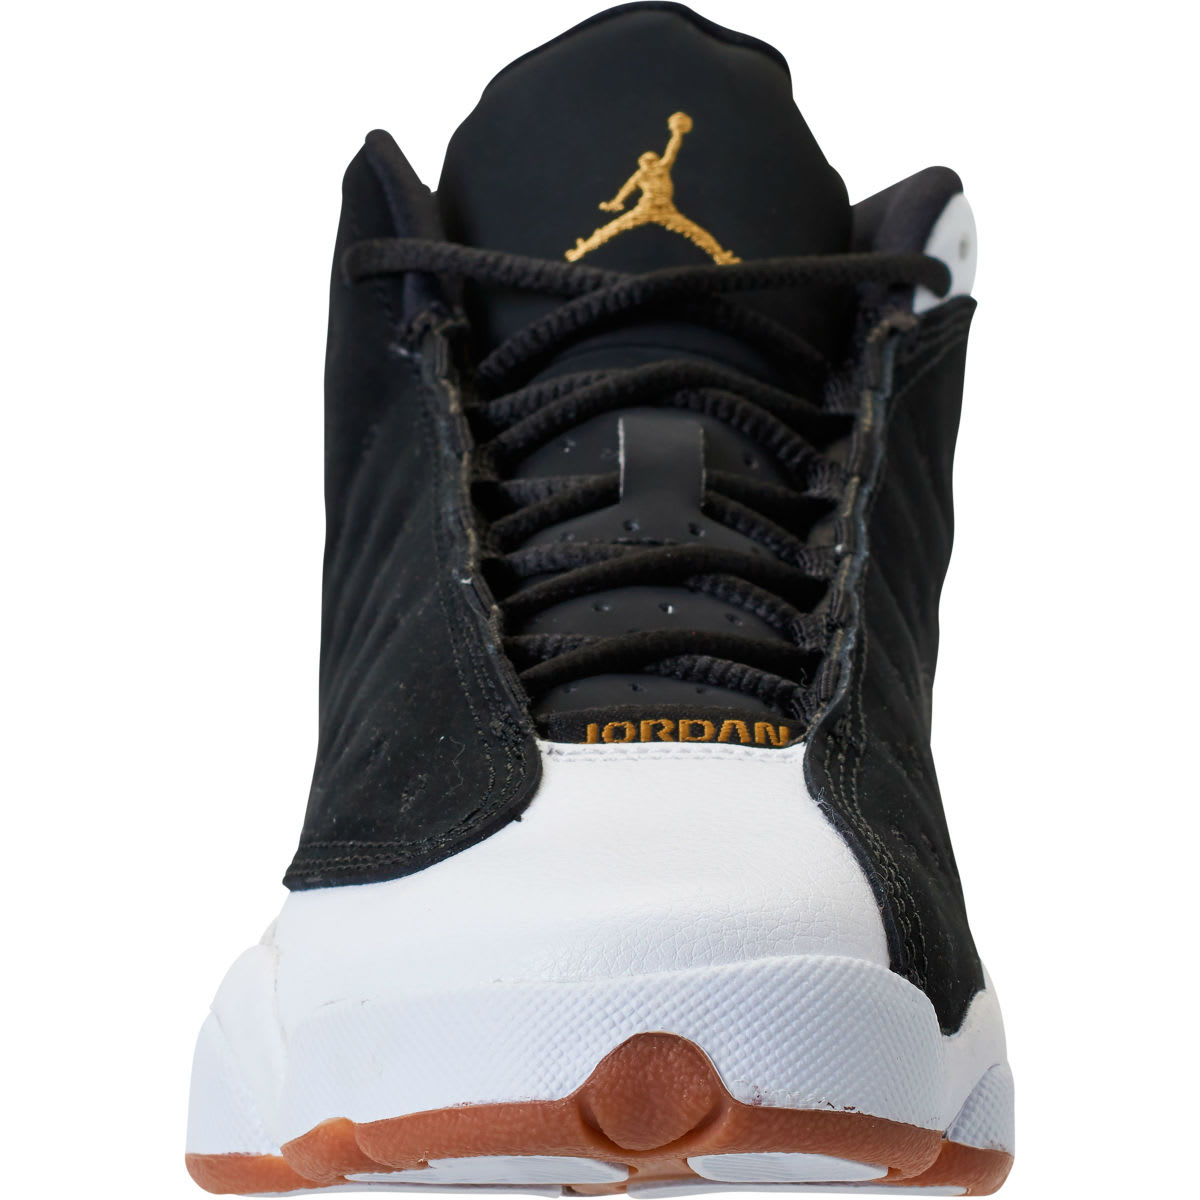 Air Jordan 13 Girls Black Gold White Gum Release Date 439358-021 Front